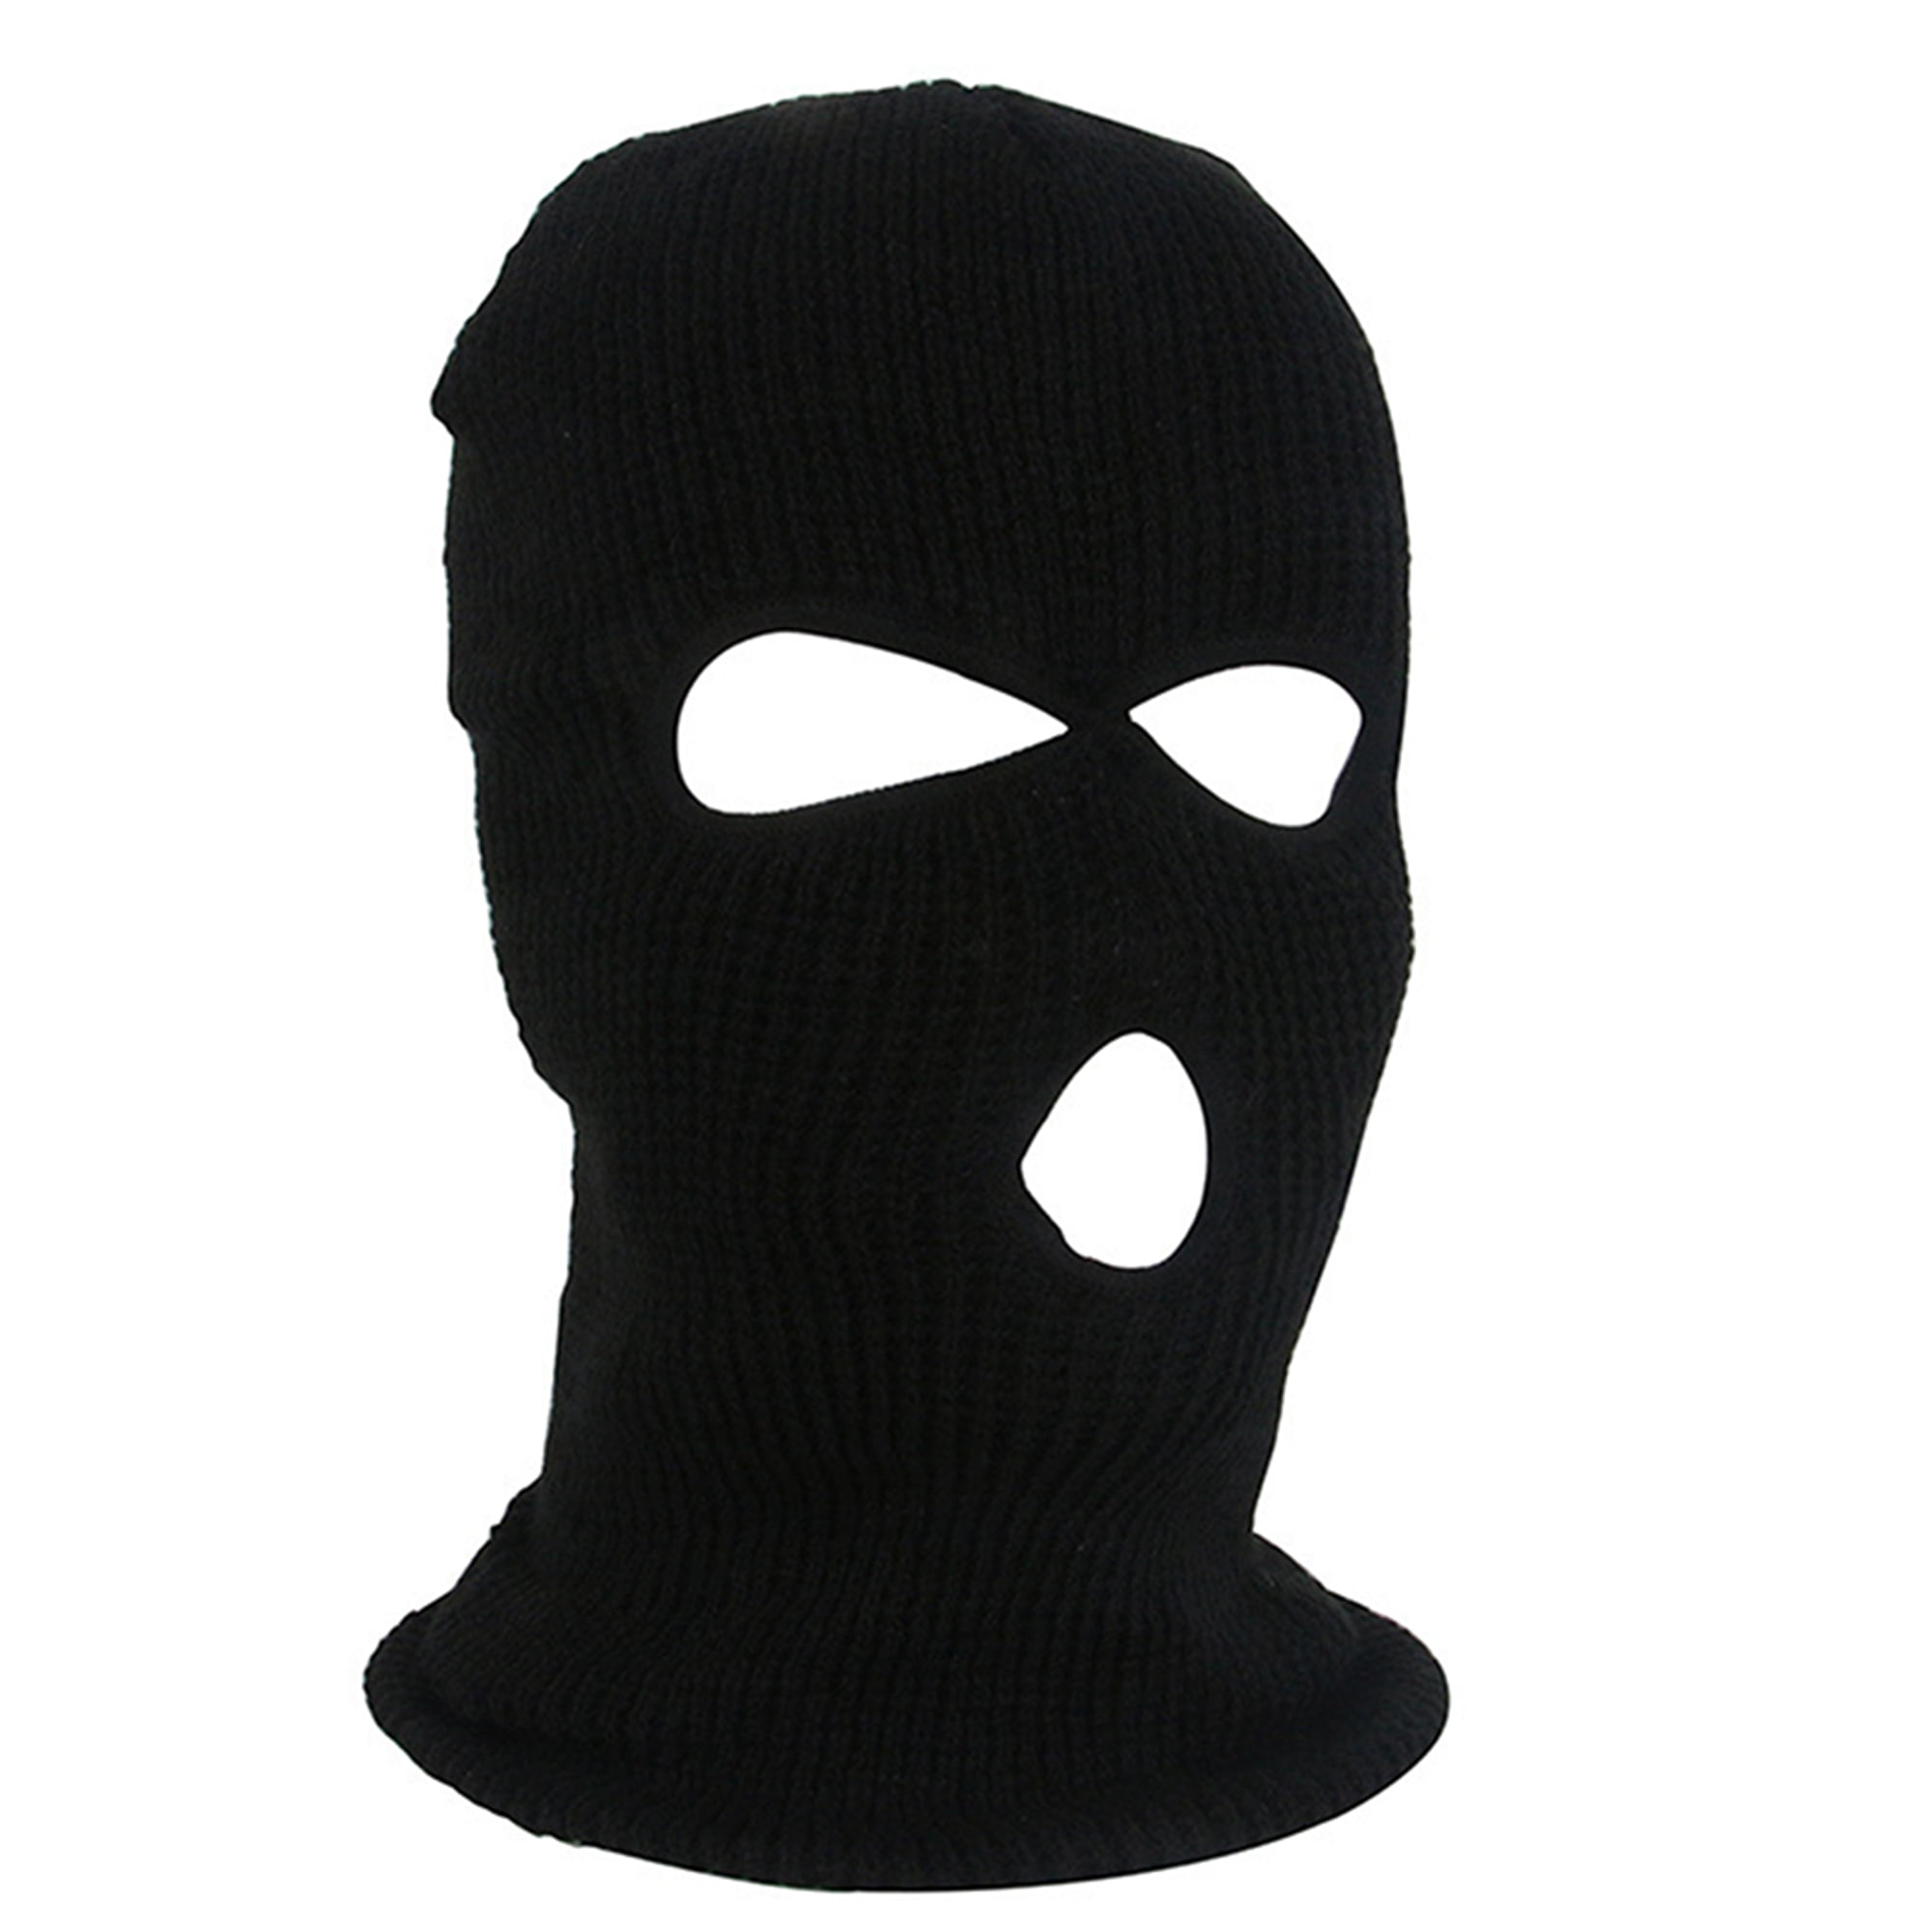 Black Knit Hat 3 Hole Ski Mask Balaclava Face Shield Beanie Cap Snow Winter Warm 